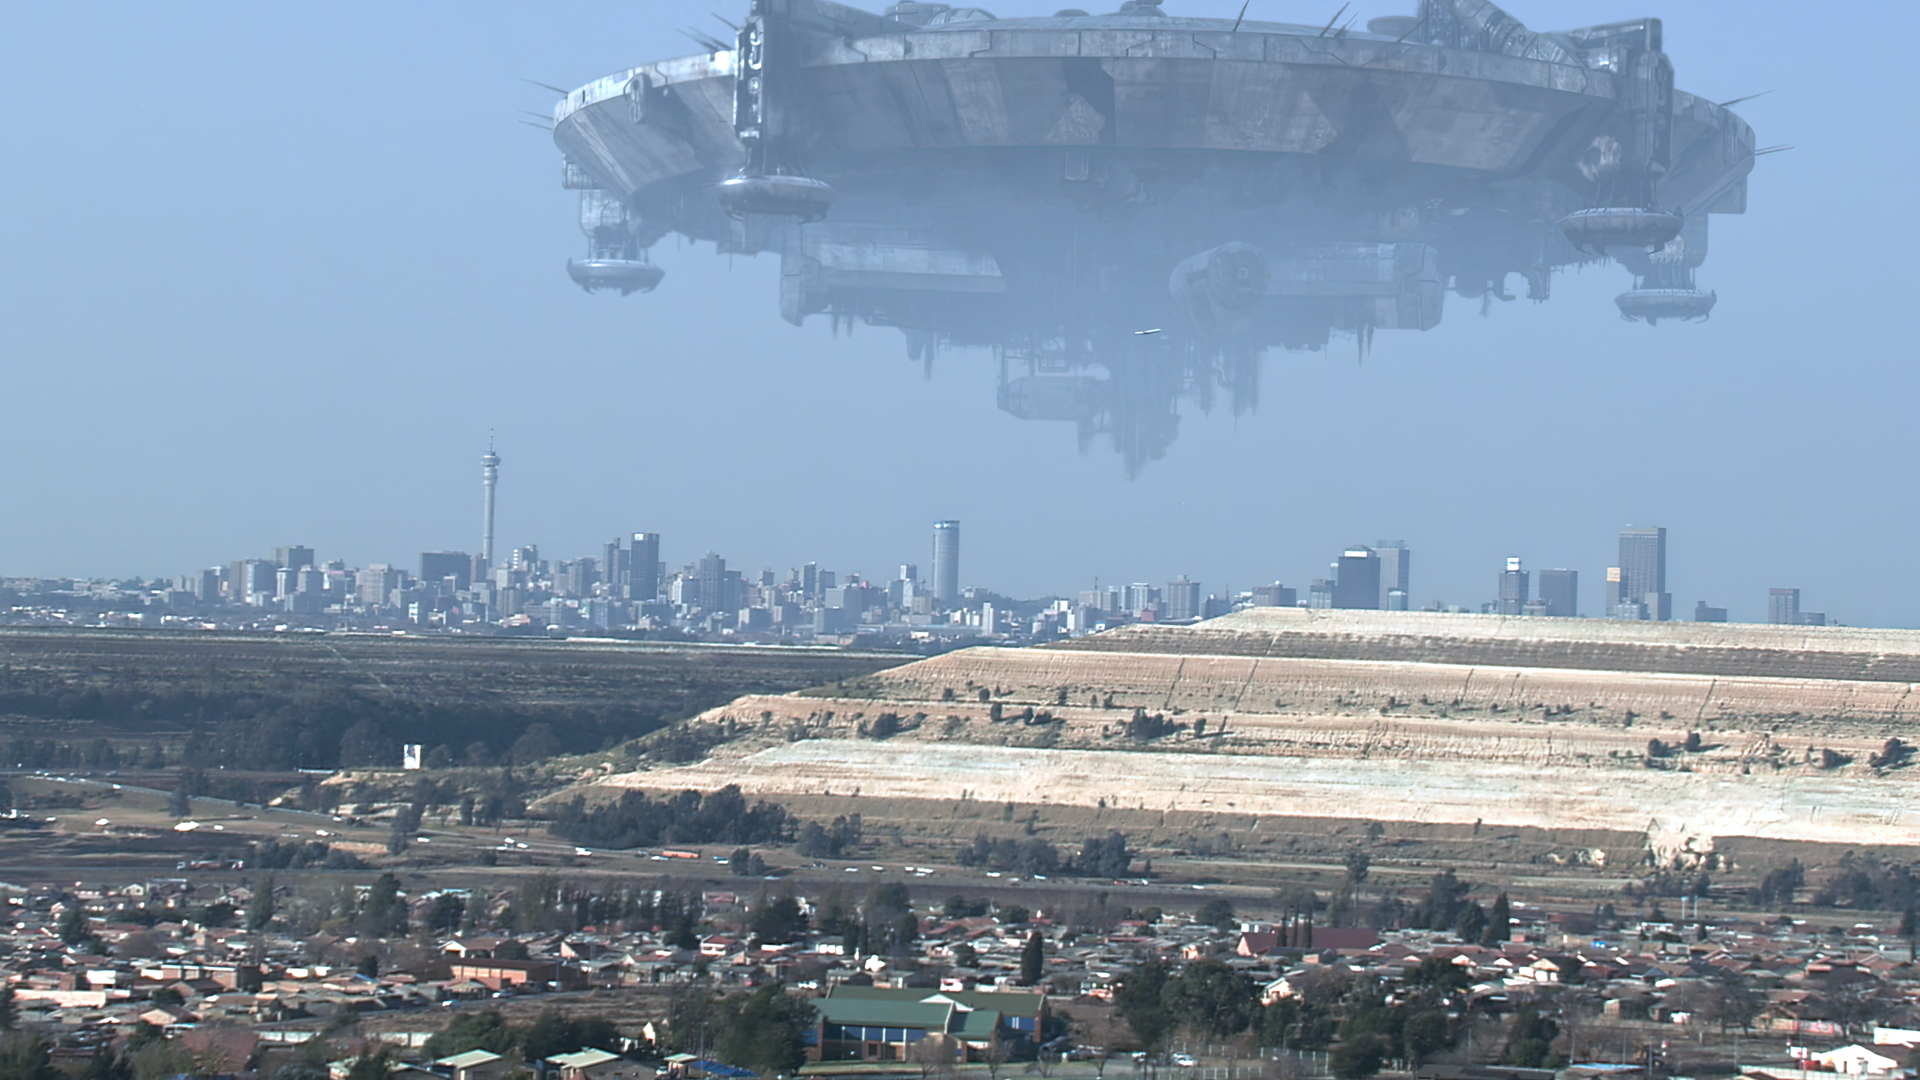 General 1920x1080 District 9 movies film stills Johannesburg spaceship sky city cityscape technology